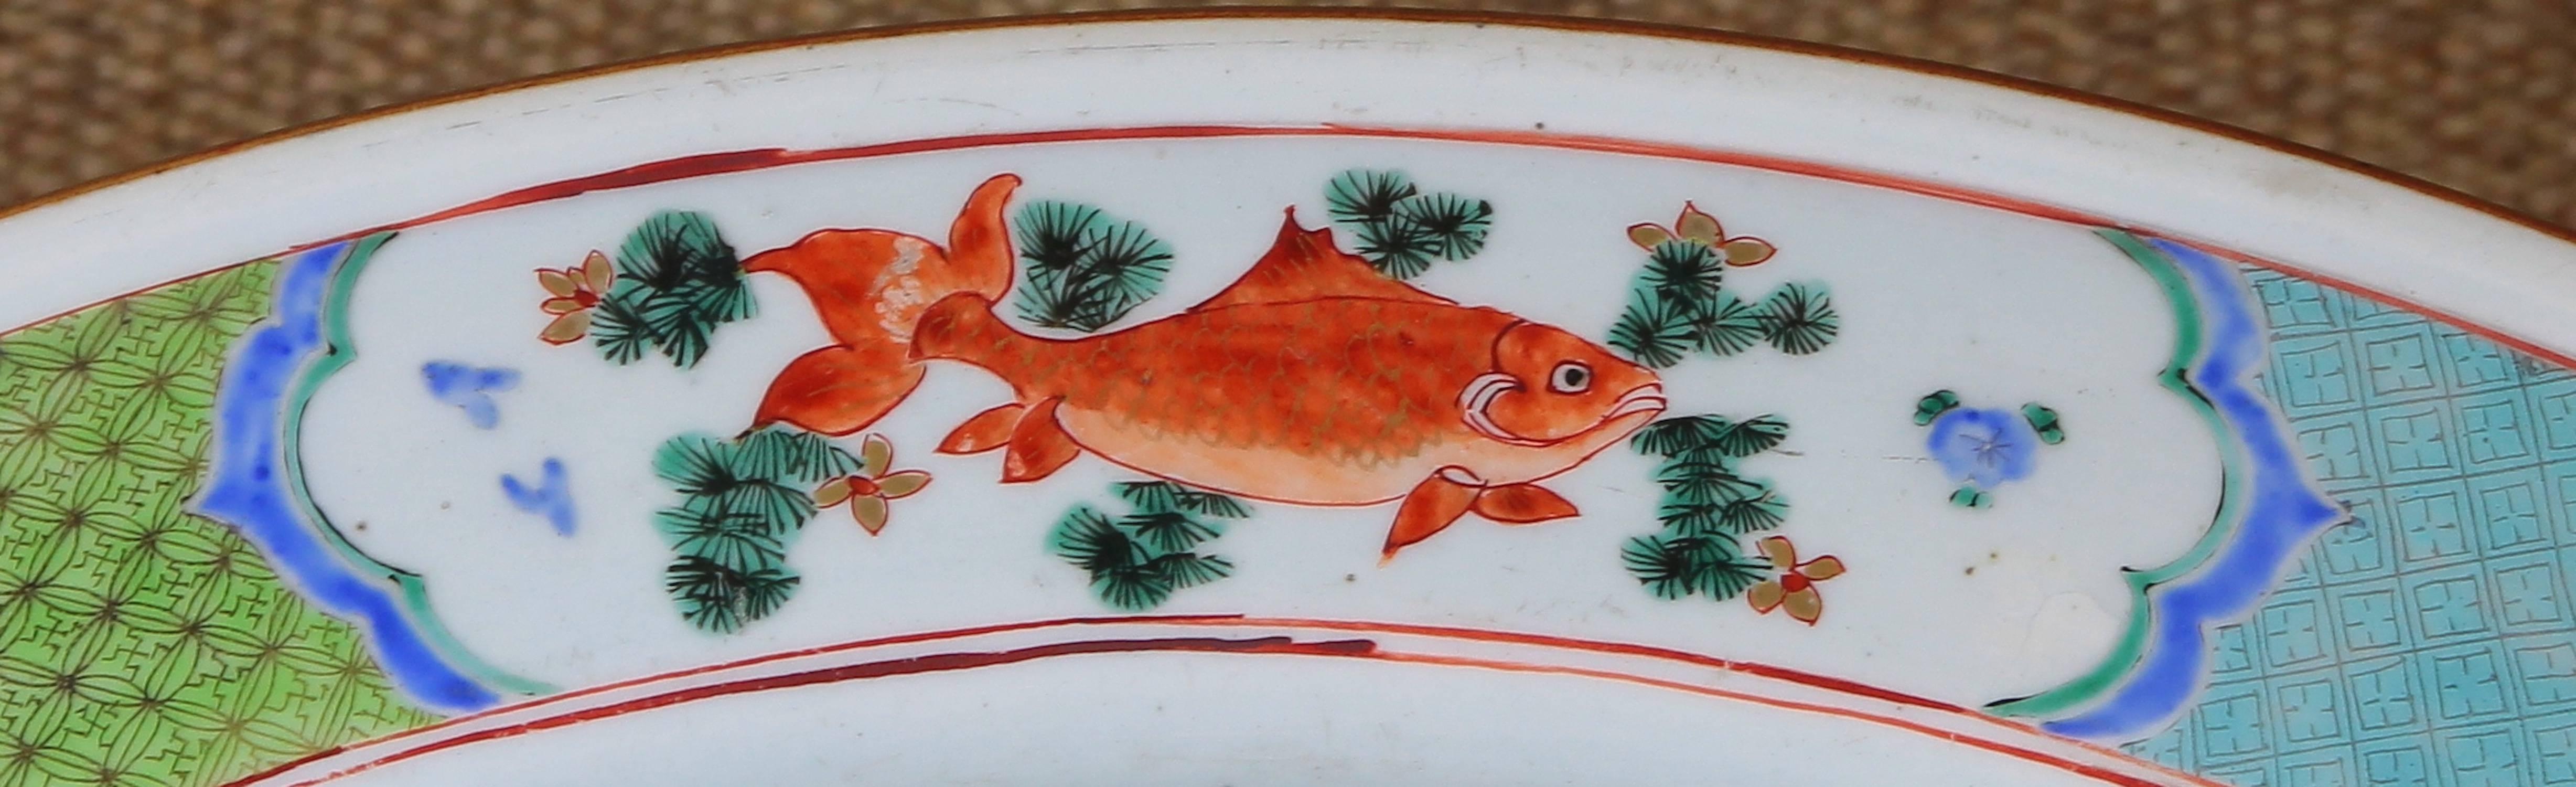 Large 18th Century Chinese Export Porcelain Aquarium For Sale 1